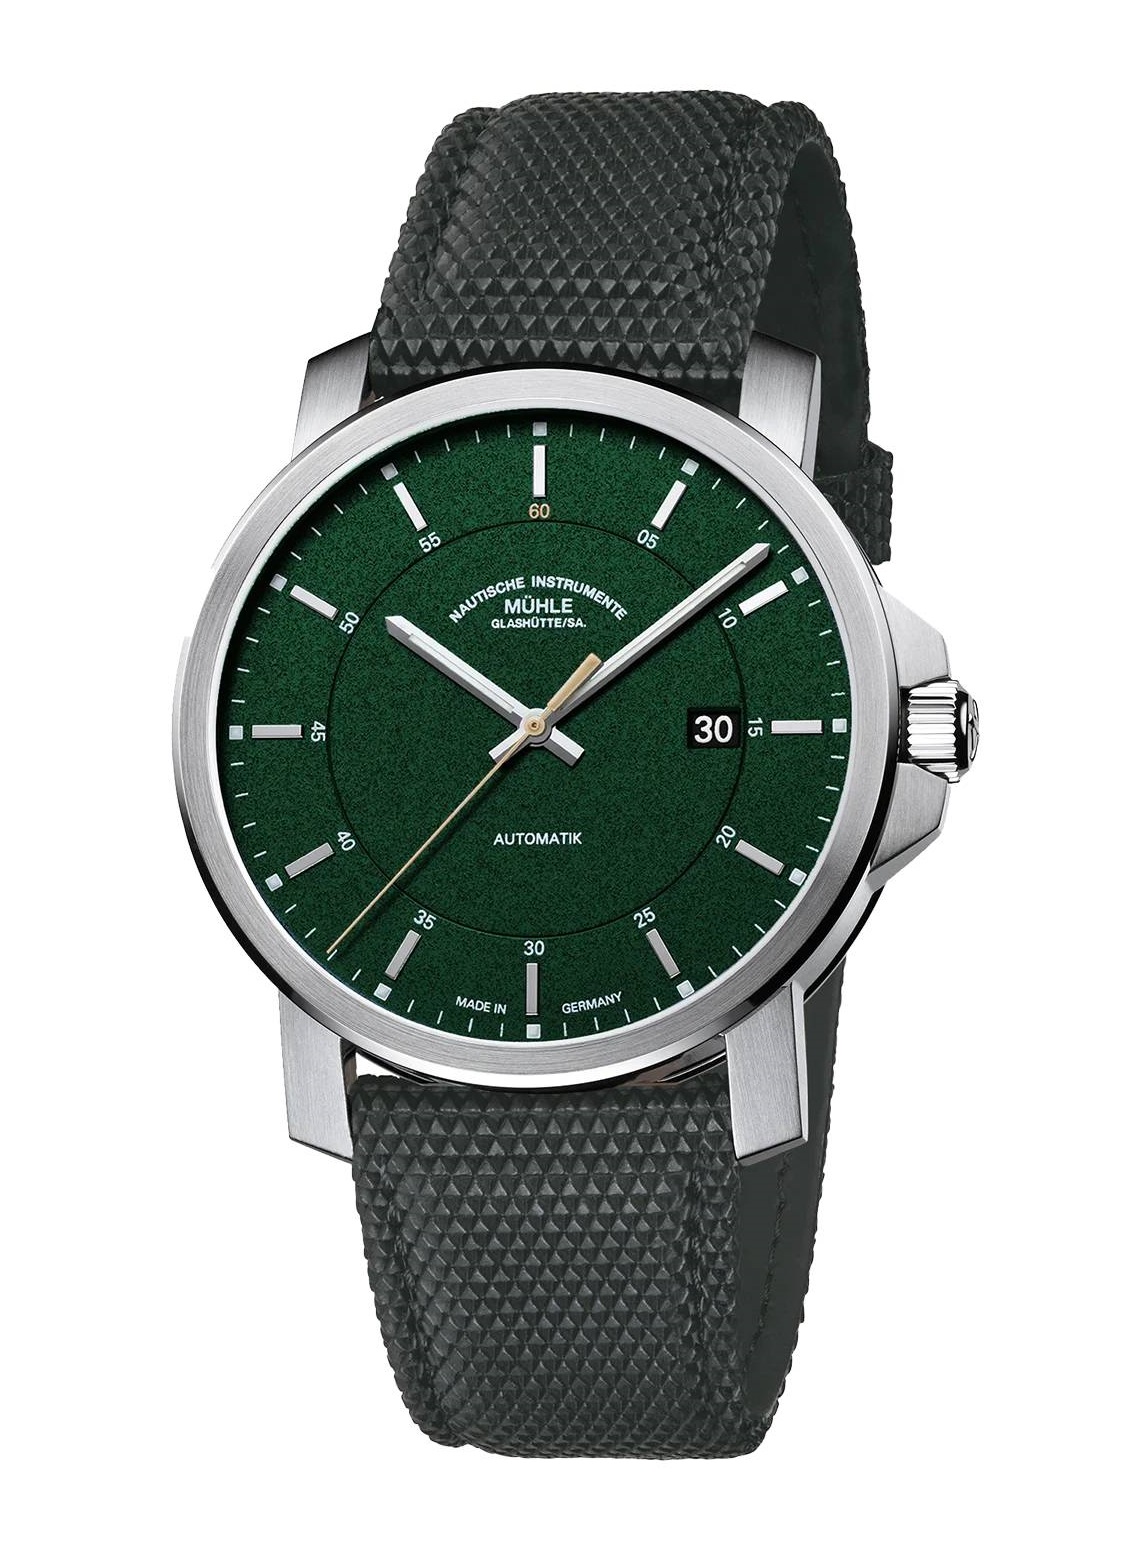 Men's watch / unisex  MÜHLE-GLASHÜTTE, 29ER Casual Edition Saxony / 42.4 mm, SKU: M1-25-76-201-NB | watchphilosophy.co.uk